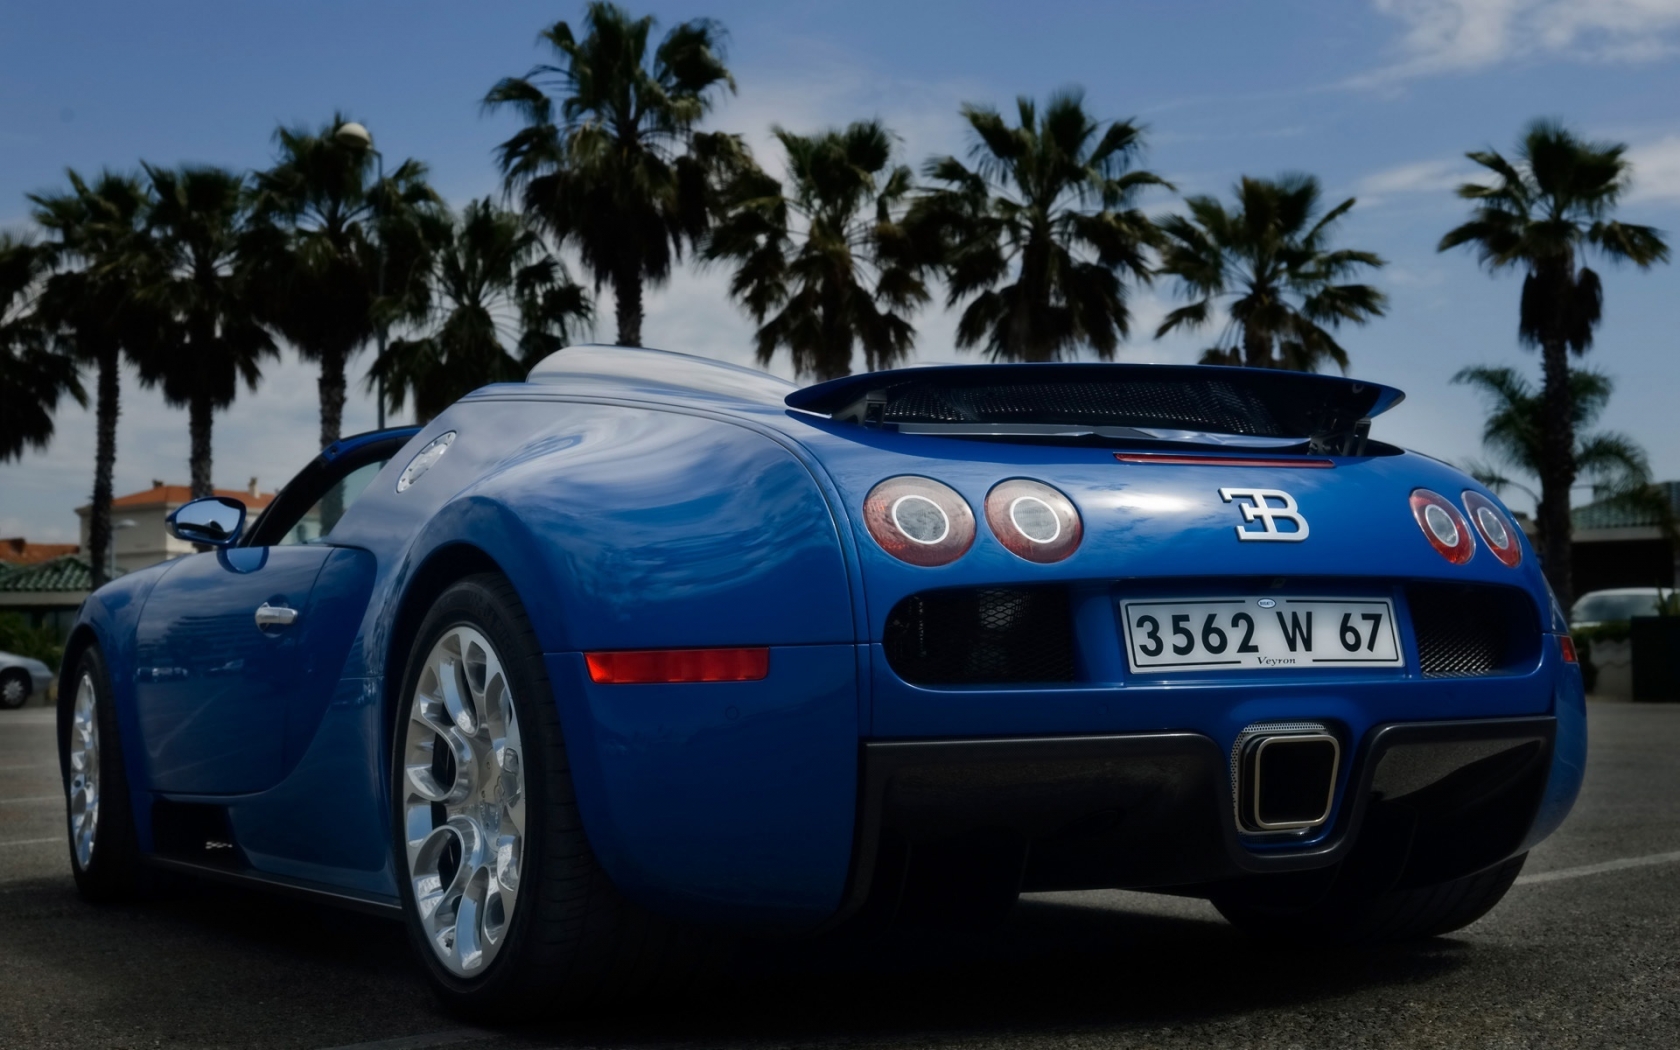 Bugatti Veyron 16.4 Grand Sport 2010 in Cannes - Rear Angle 2 for 1680 x 1050 widescreen resolution